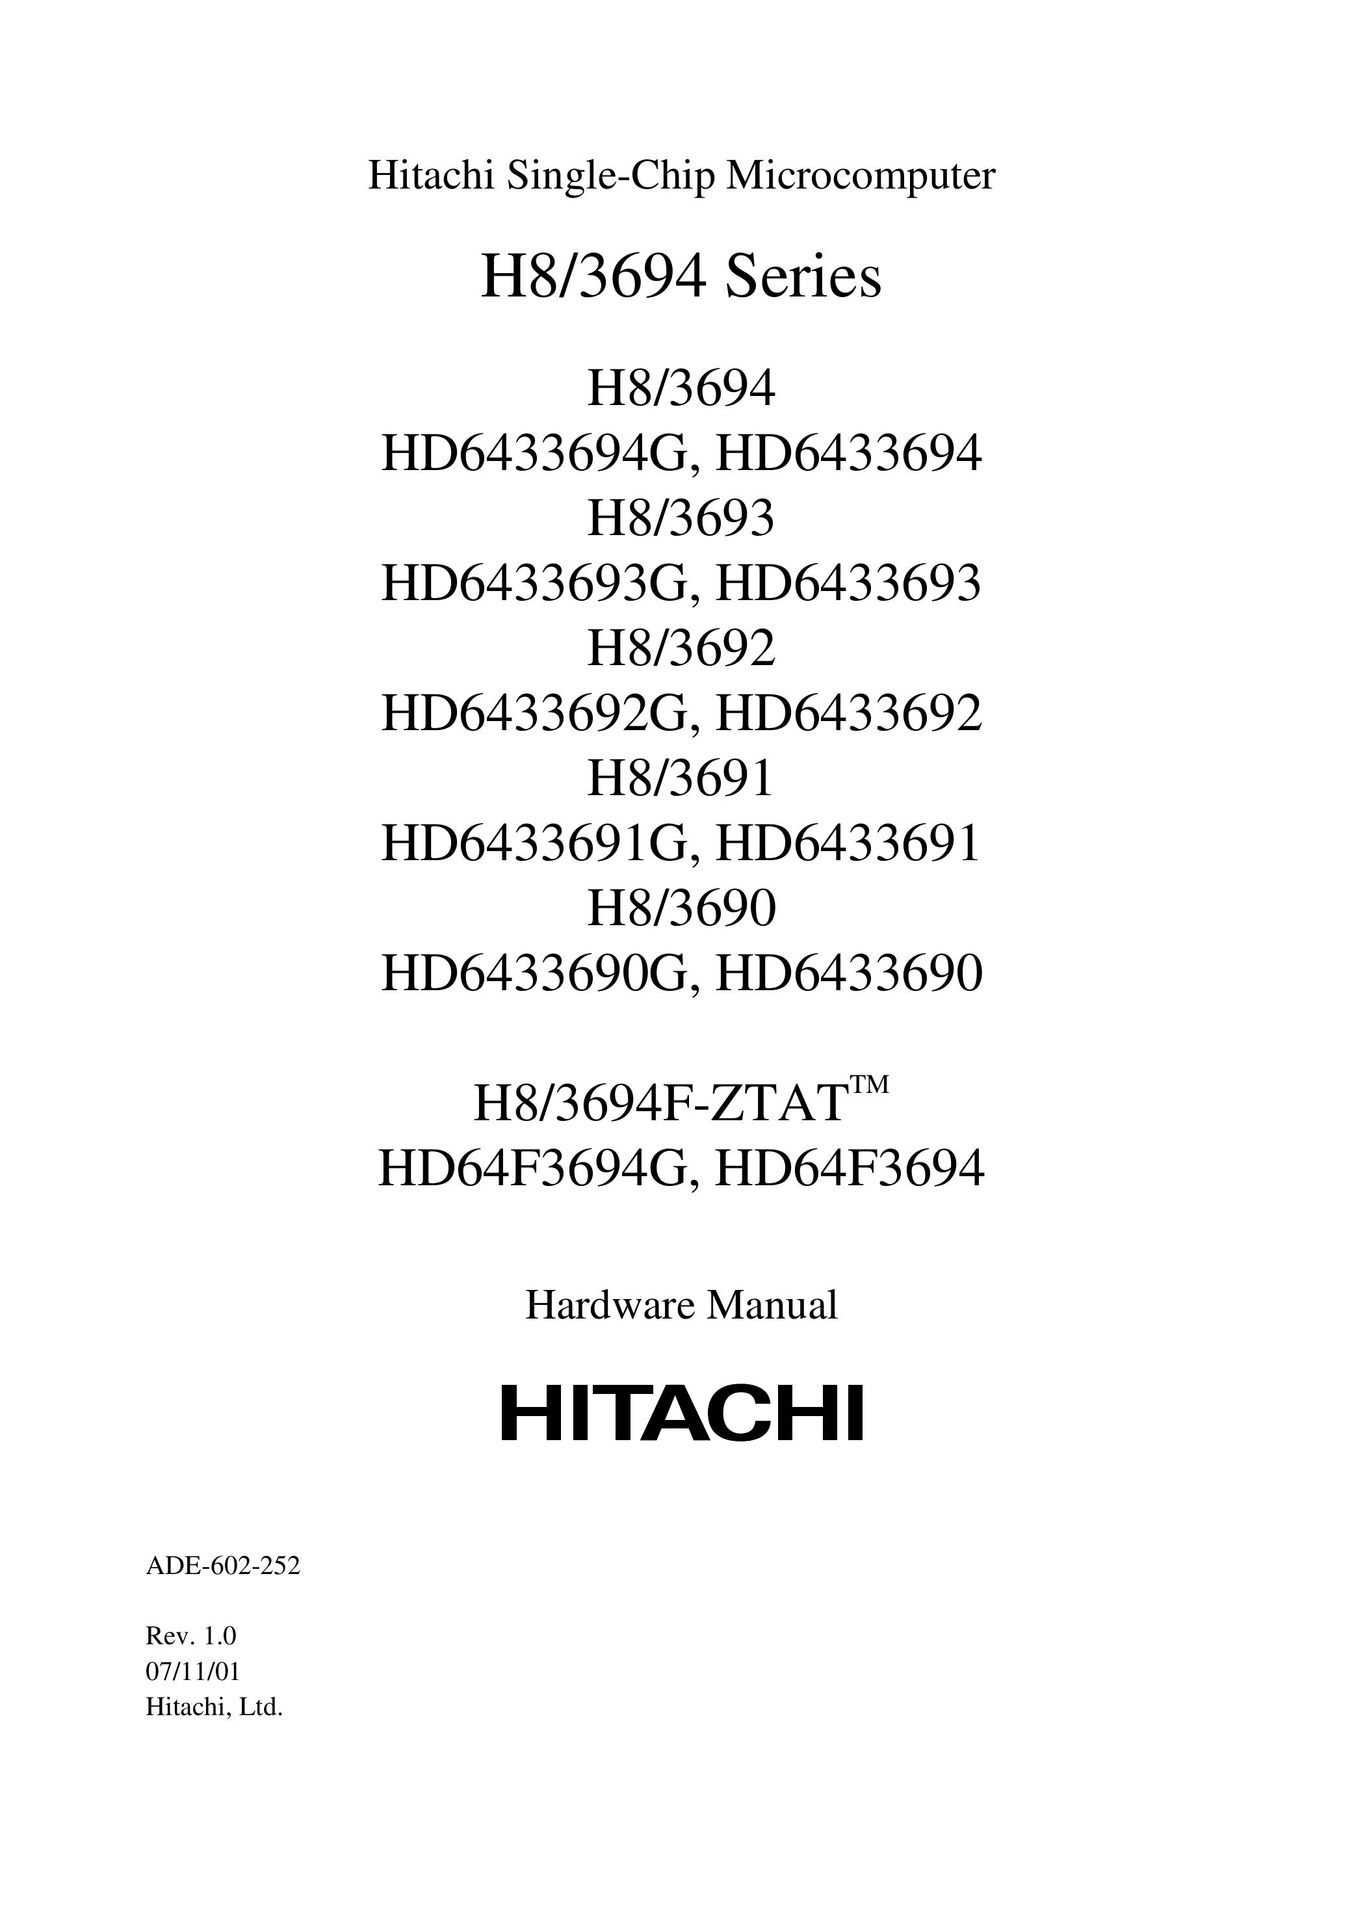 Hitachi HD64F3694 TV Mount User Manual